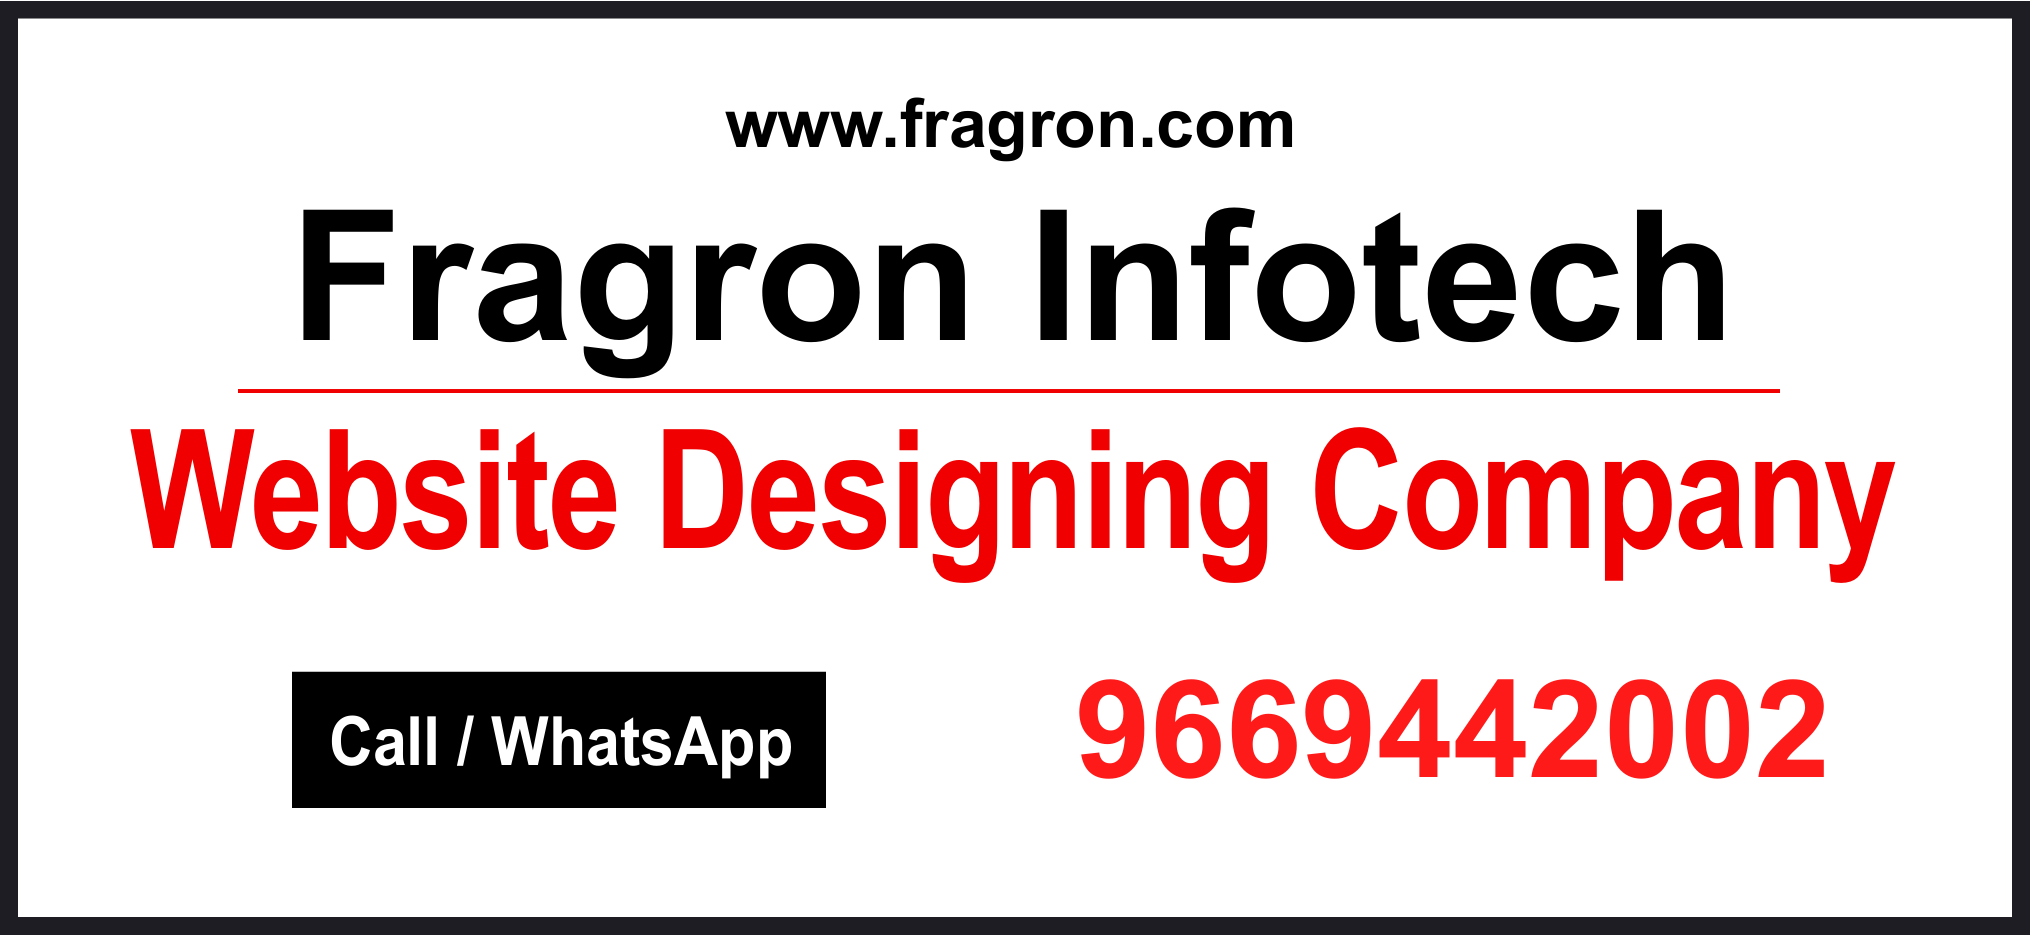 Website Designing Company in India.